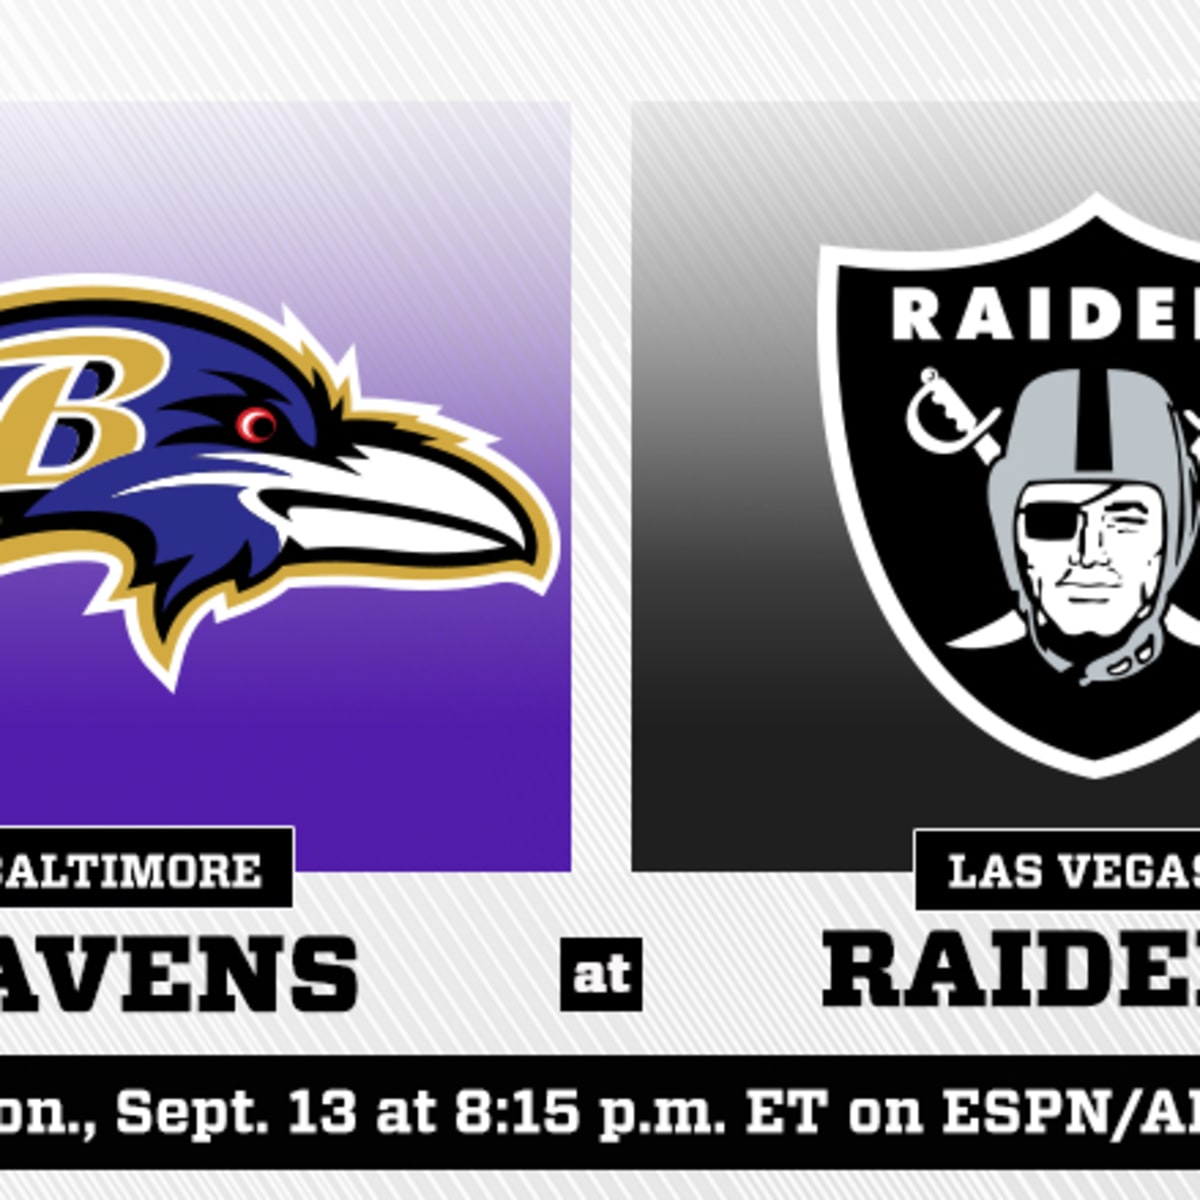 Baltimore Ravens vs Las Vegas Raiders - September 14, 2021